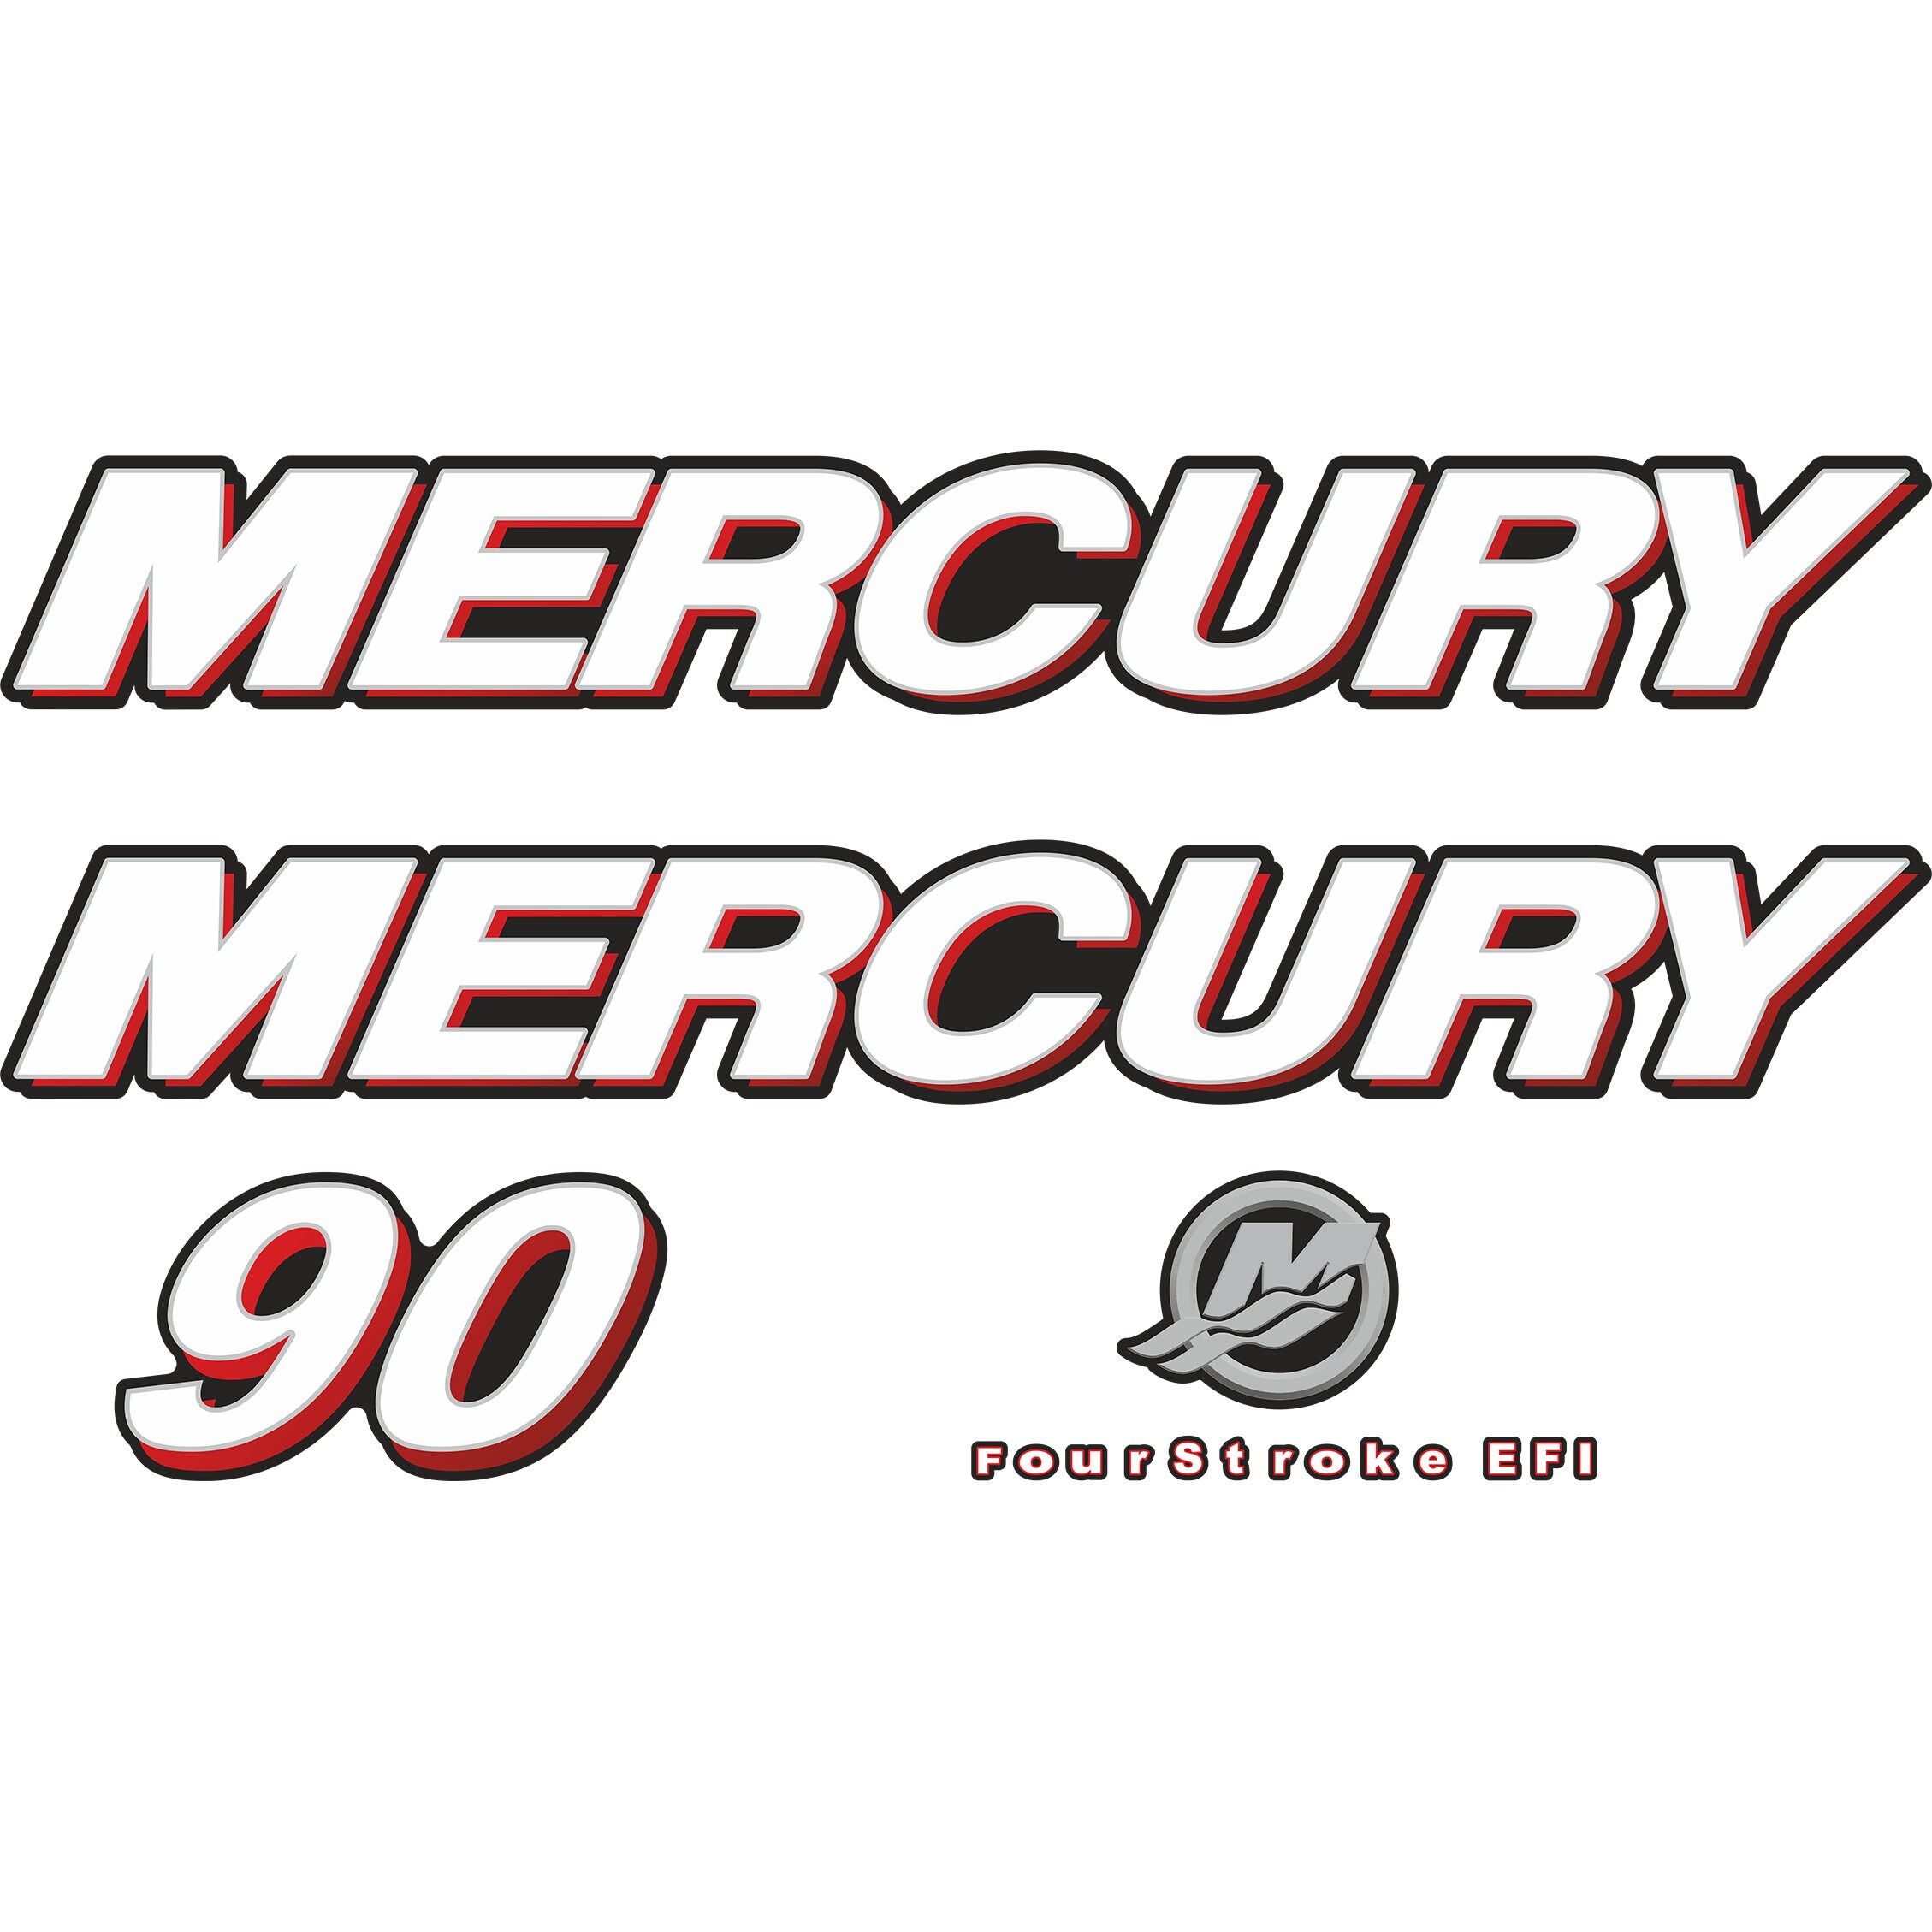 Mercury four stroke for sale  